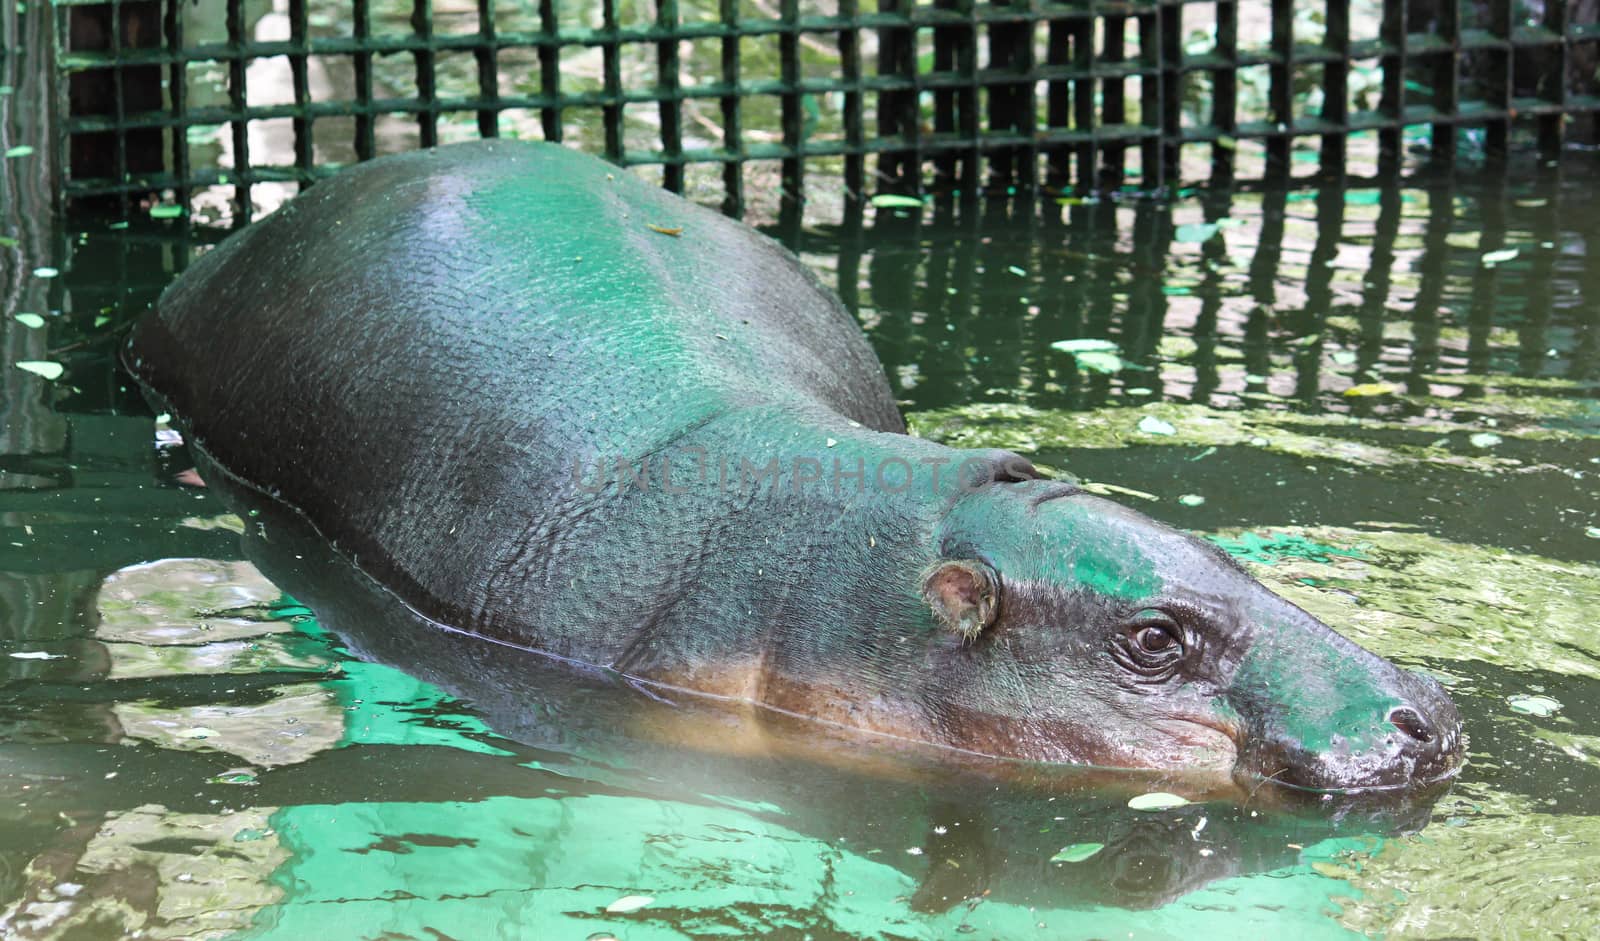 pygmy hippo in zoo